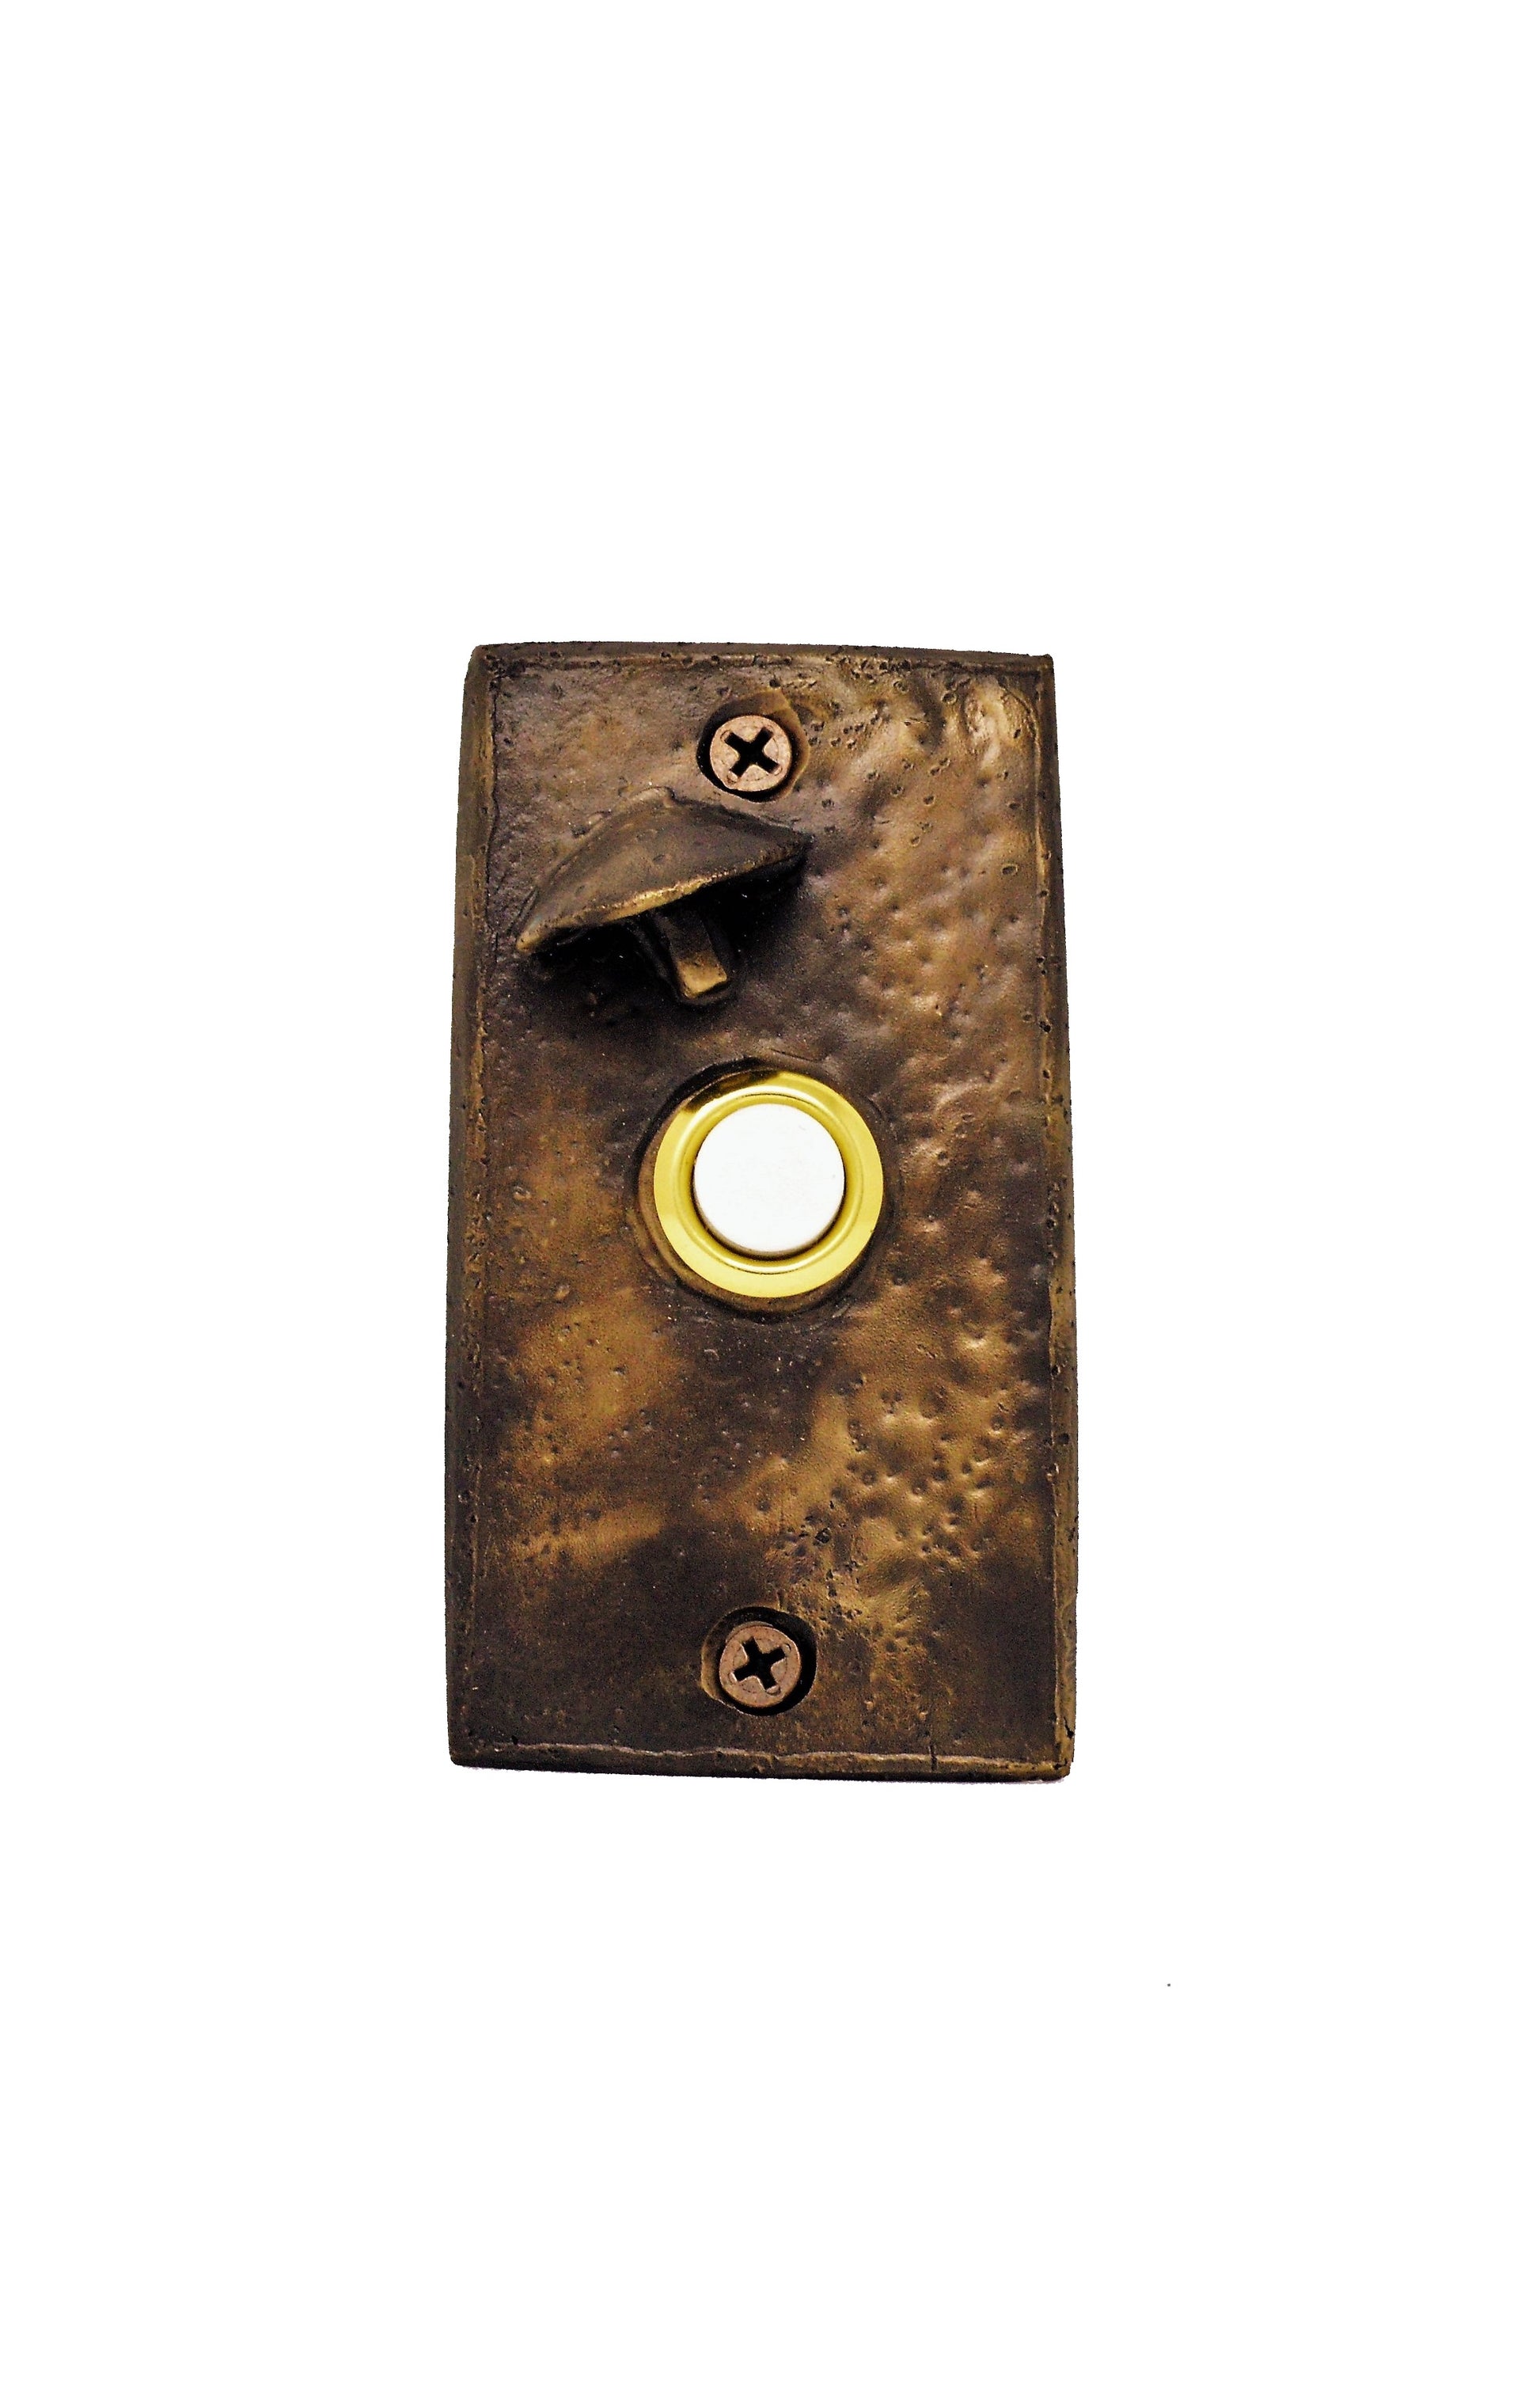 Rectangular toadstool mushroom doorbell - solid bronze - traditional patina